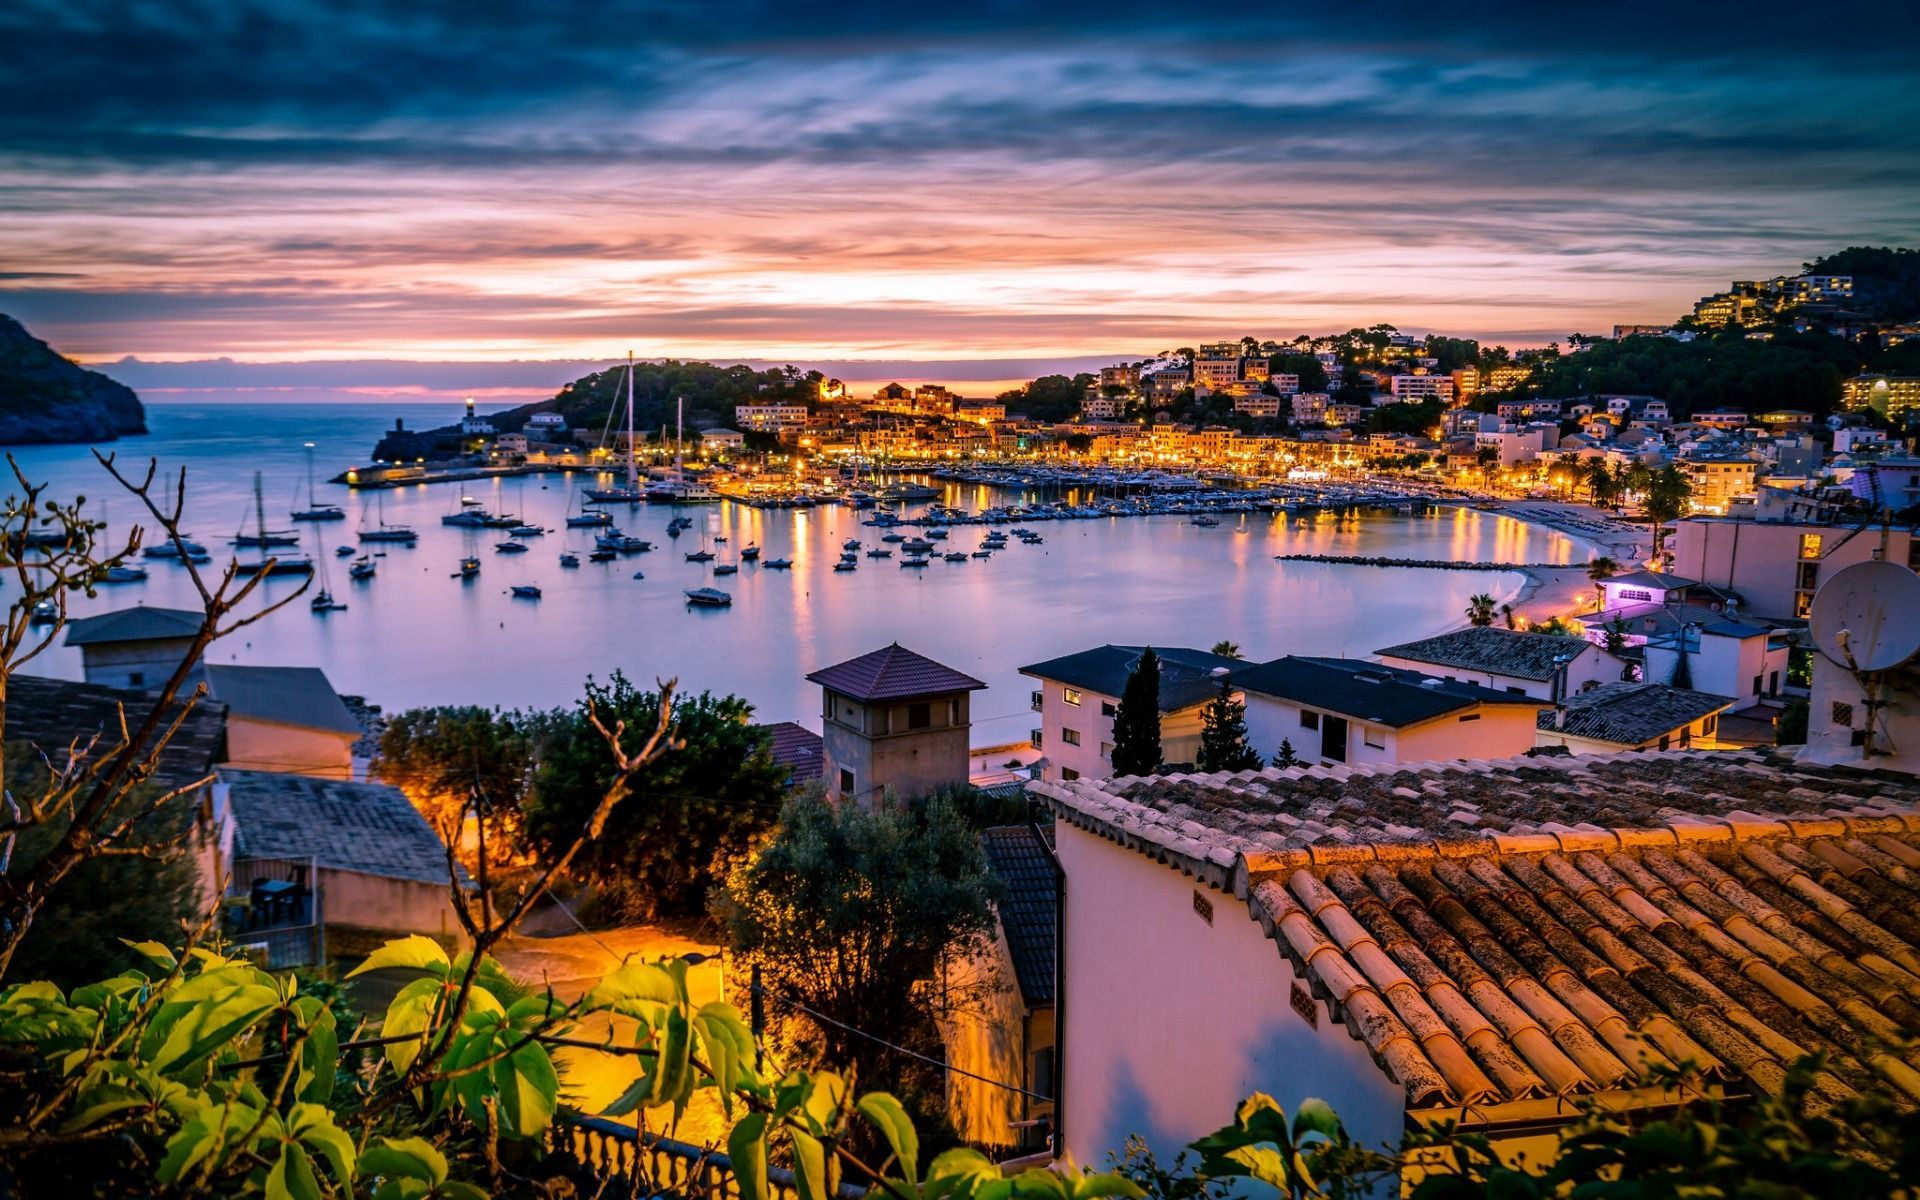 Port De Soller, Mallorca, Mediterranean Sea, yachts, sunset